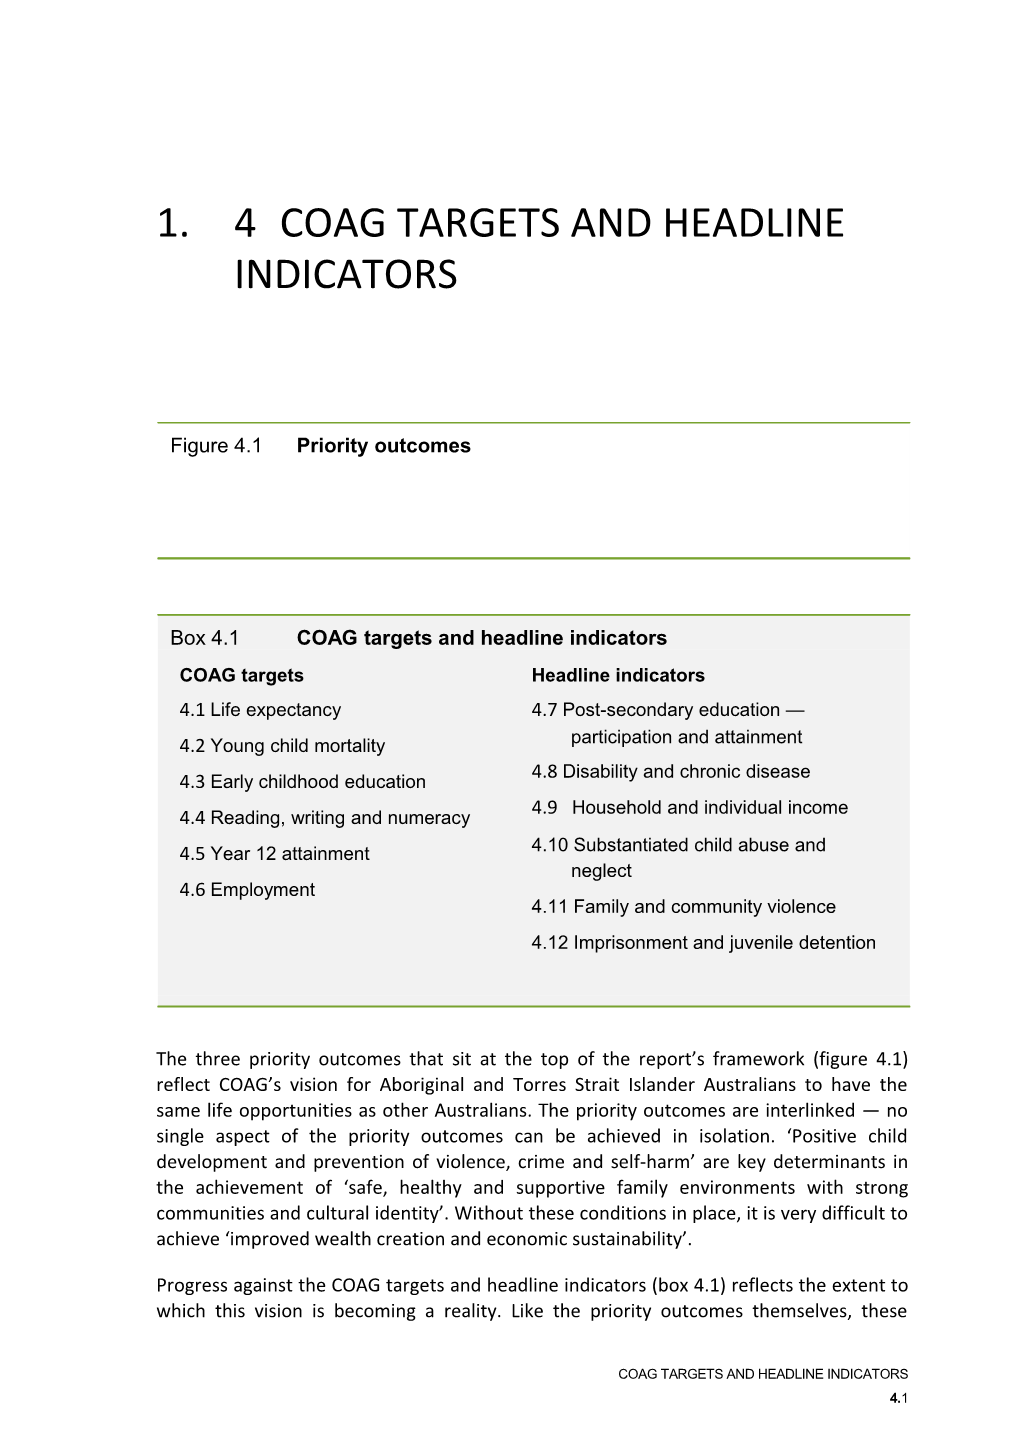 Chapter 4 COAG Targets and Headline Indicators - Overcoming Indigenous Disadvantage - Key